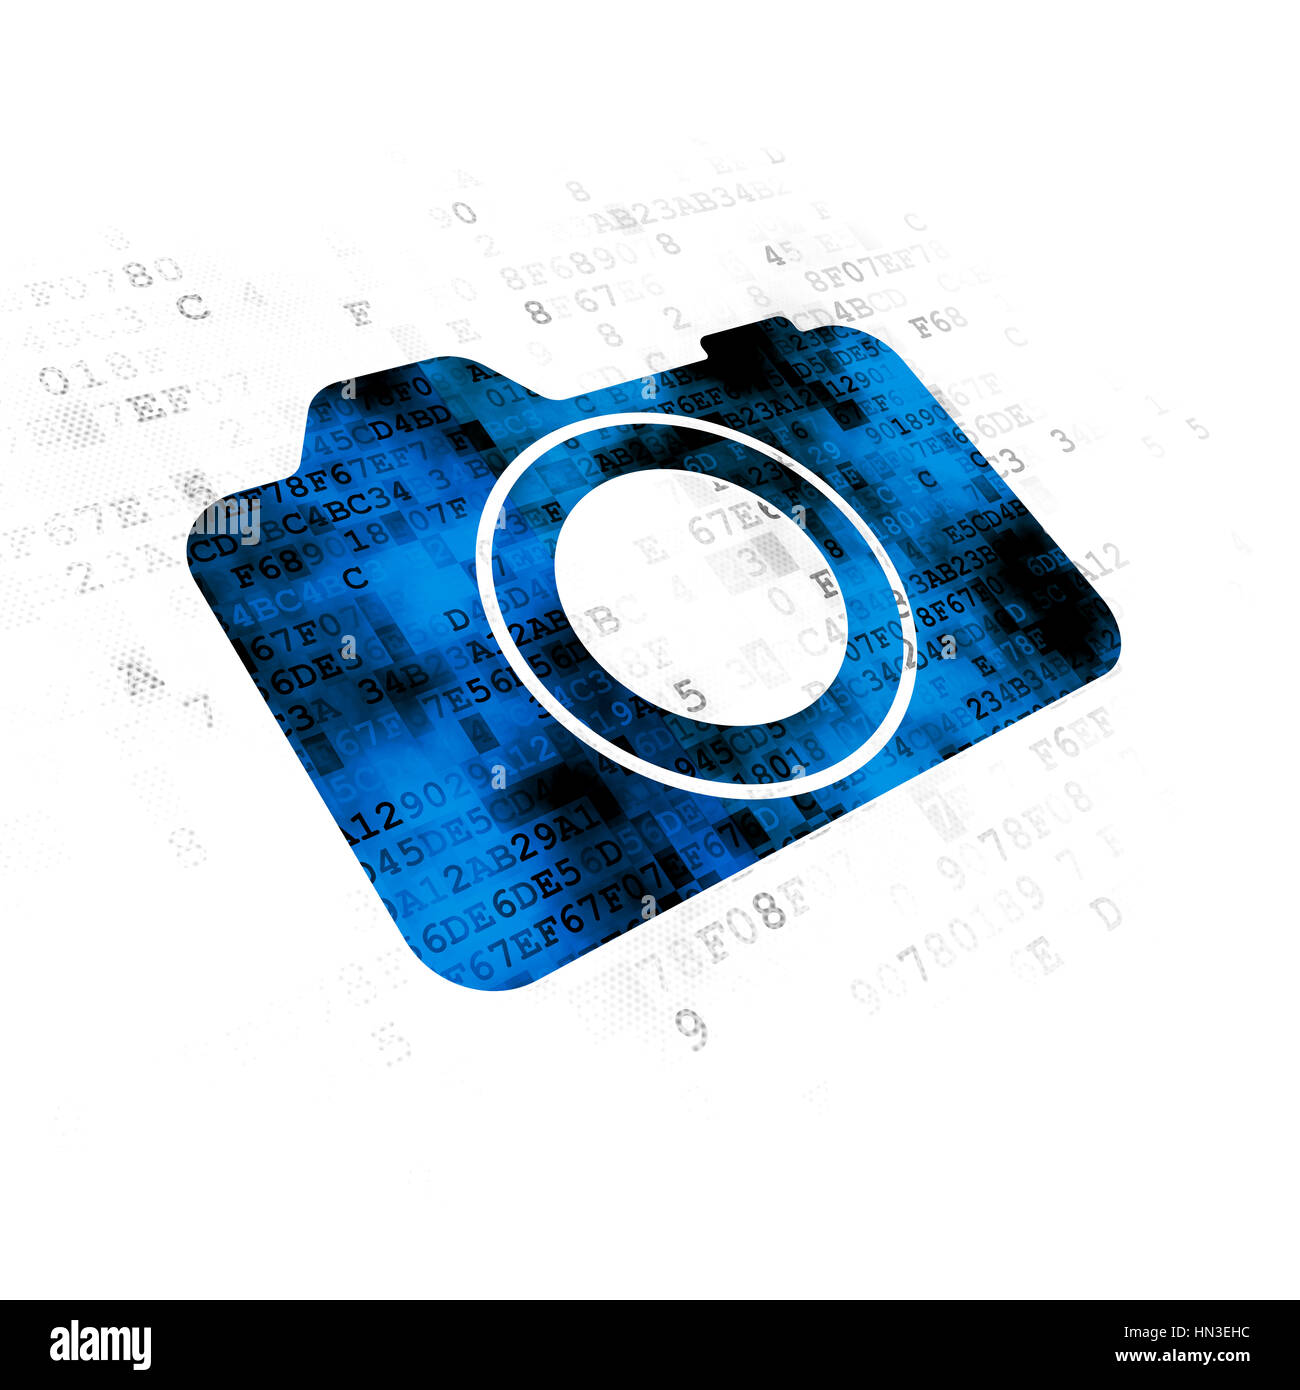 Vacation concept: Pixelated blue Photo Camera icon on Digital background Stock Photo